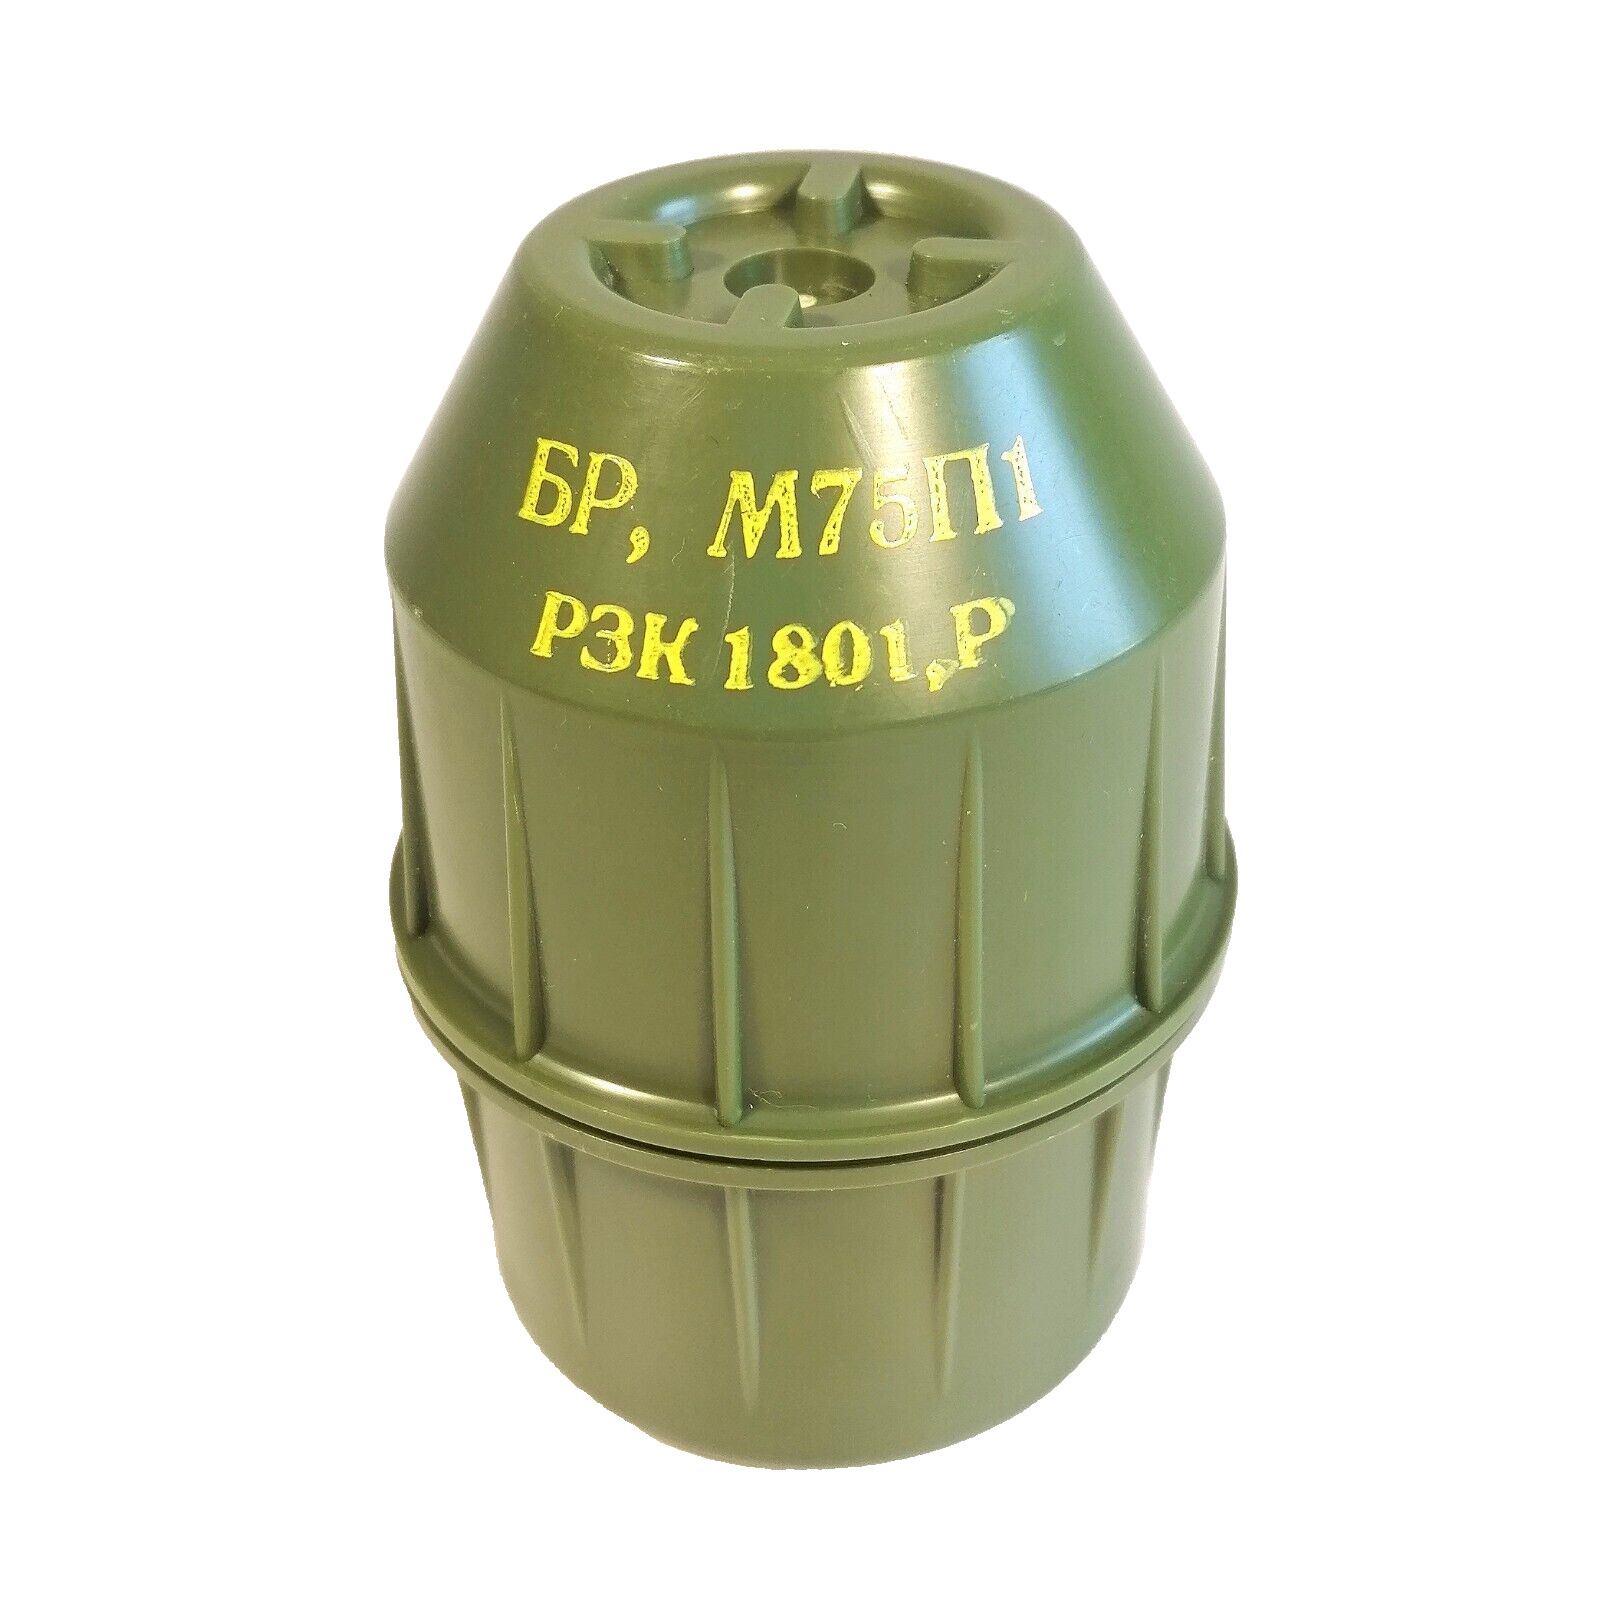 Genuine Yugo Serbian military Grenade Case for M75 Army Hand Grenade Waterproof 